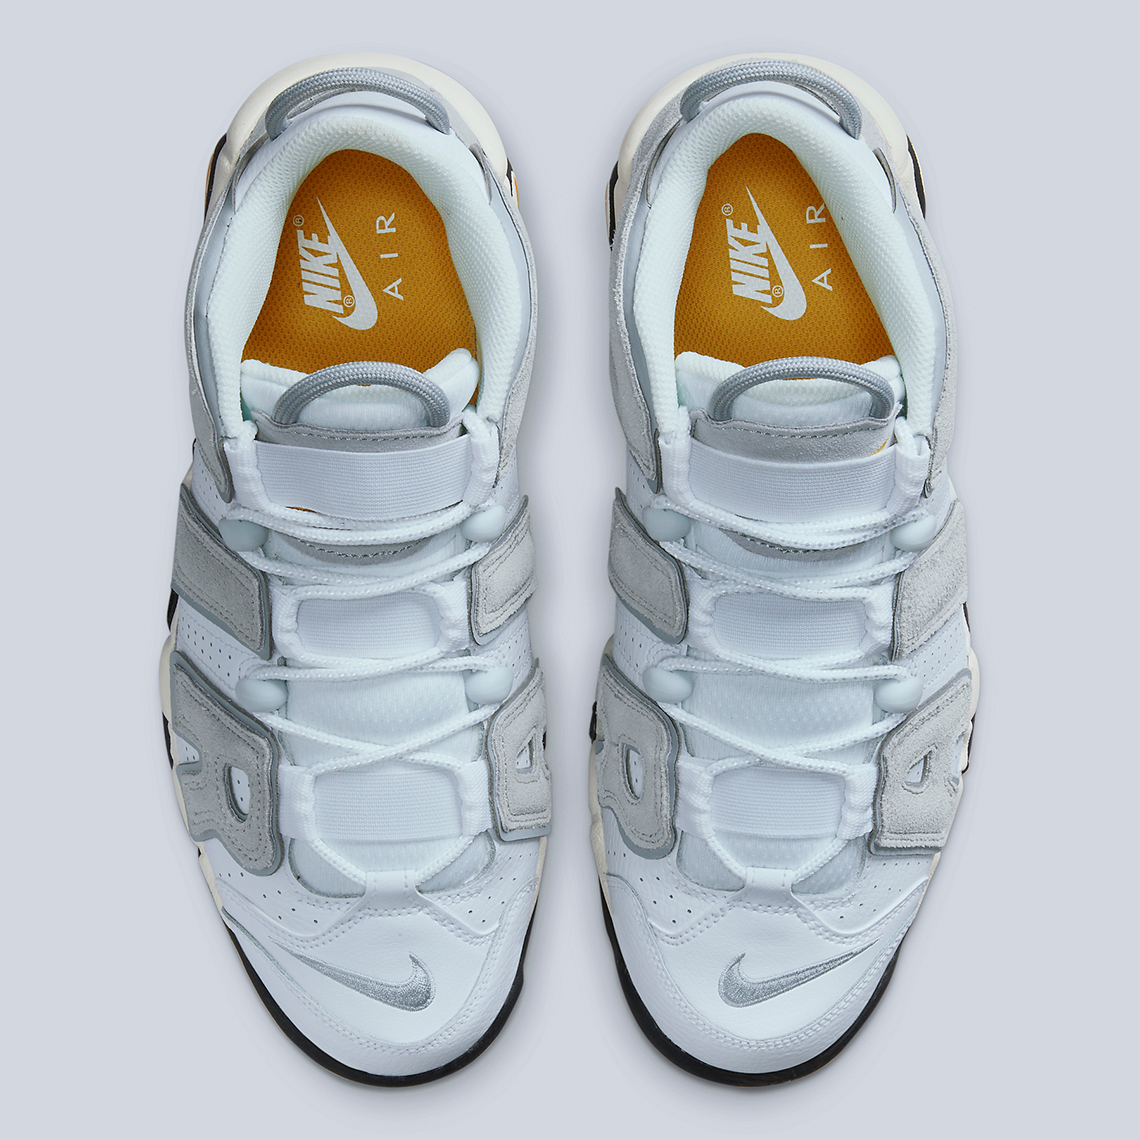 Nike zapatillas de running Nike niño niña ritmo bajo maratón talla 43 grises Dz4516 100 3